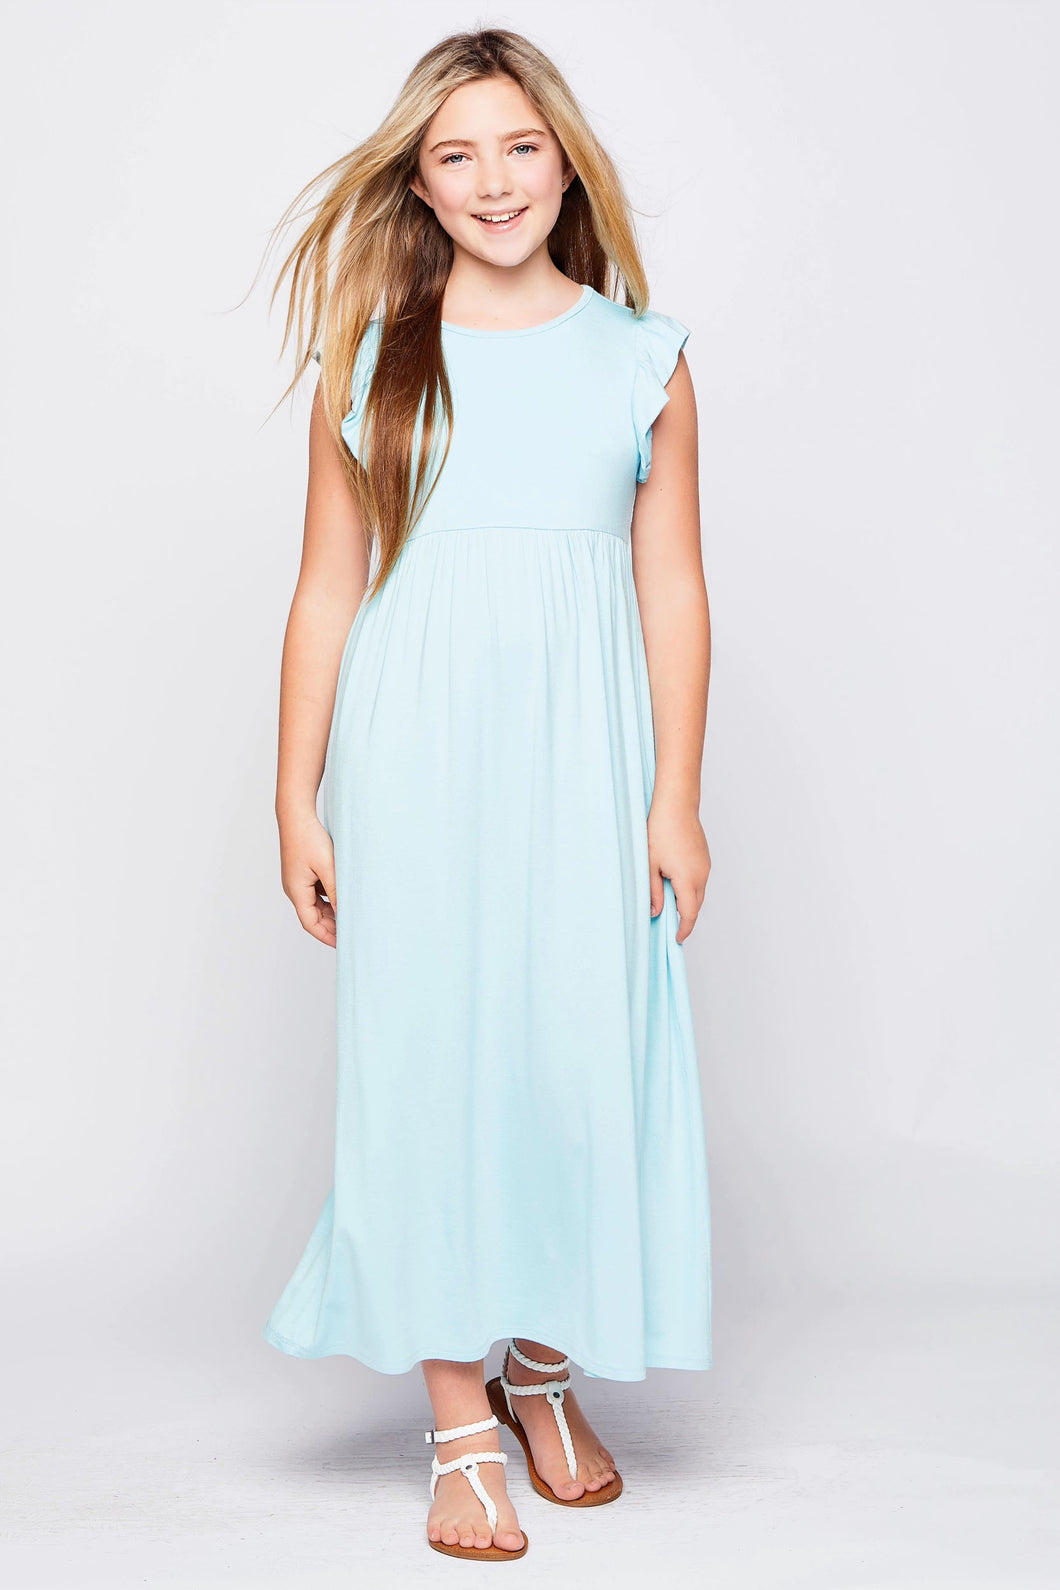 Kids Solid Ruffle Maxi Dress in Aqua Style 3974